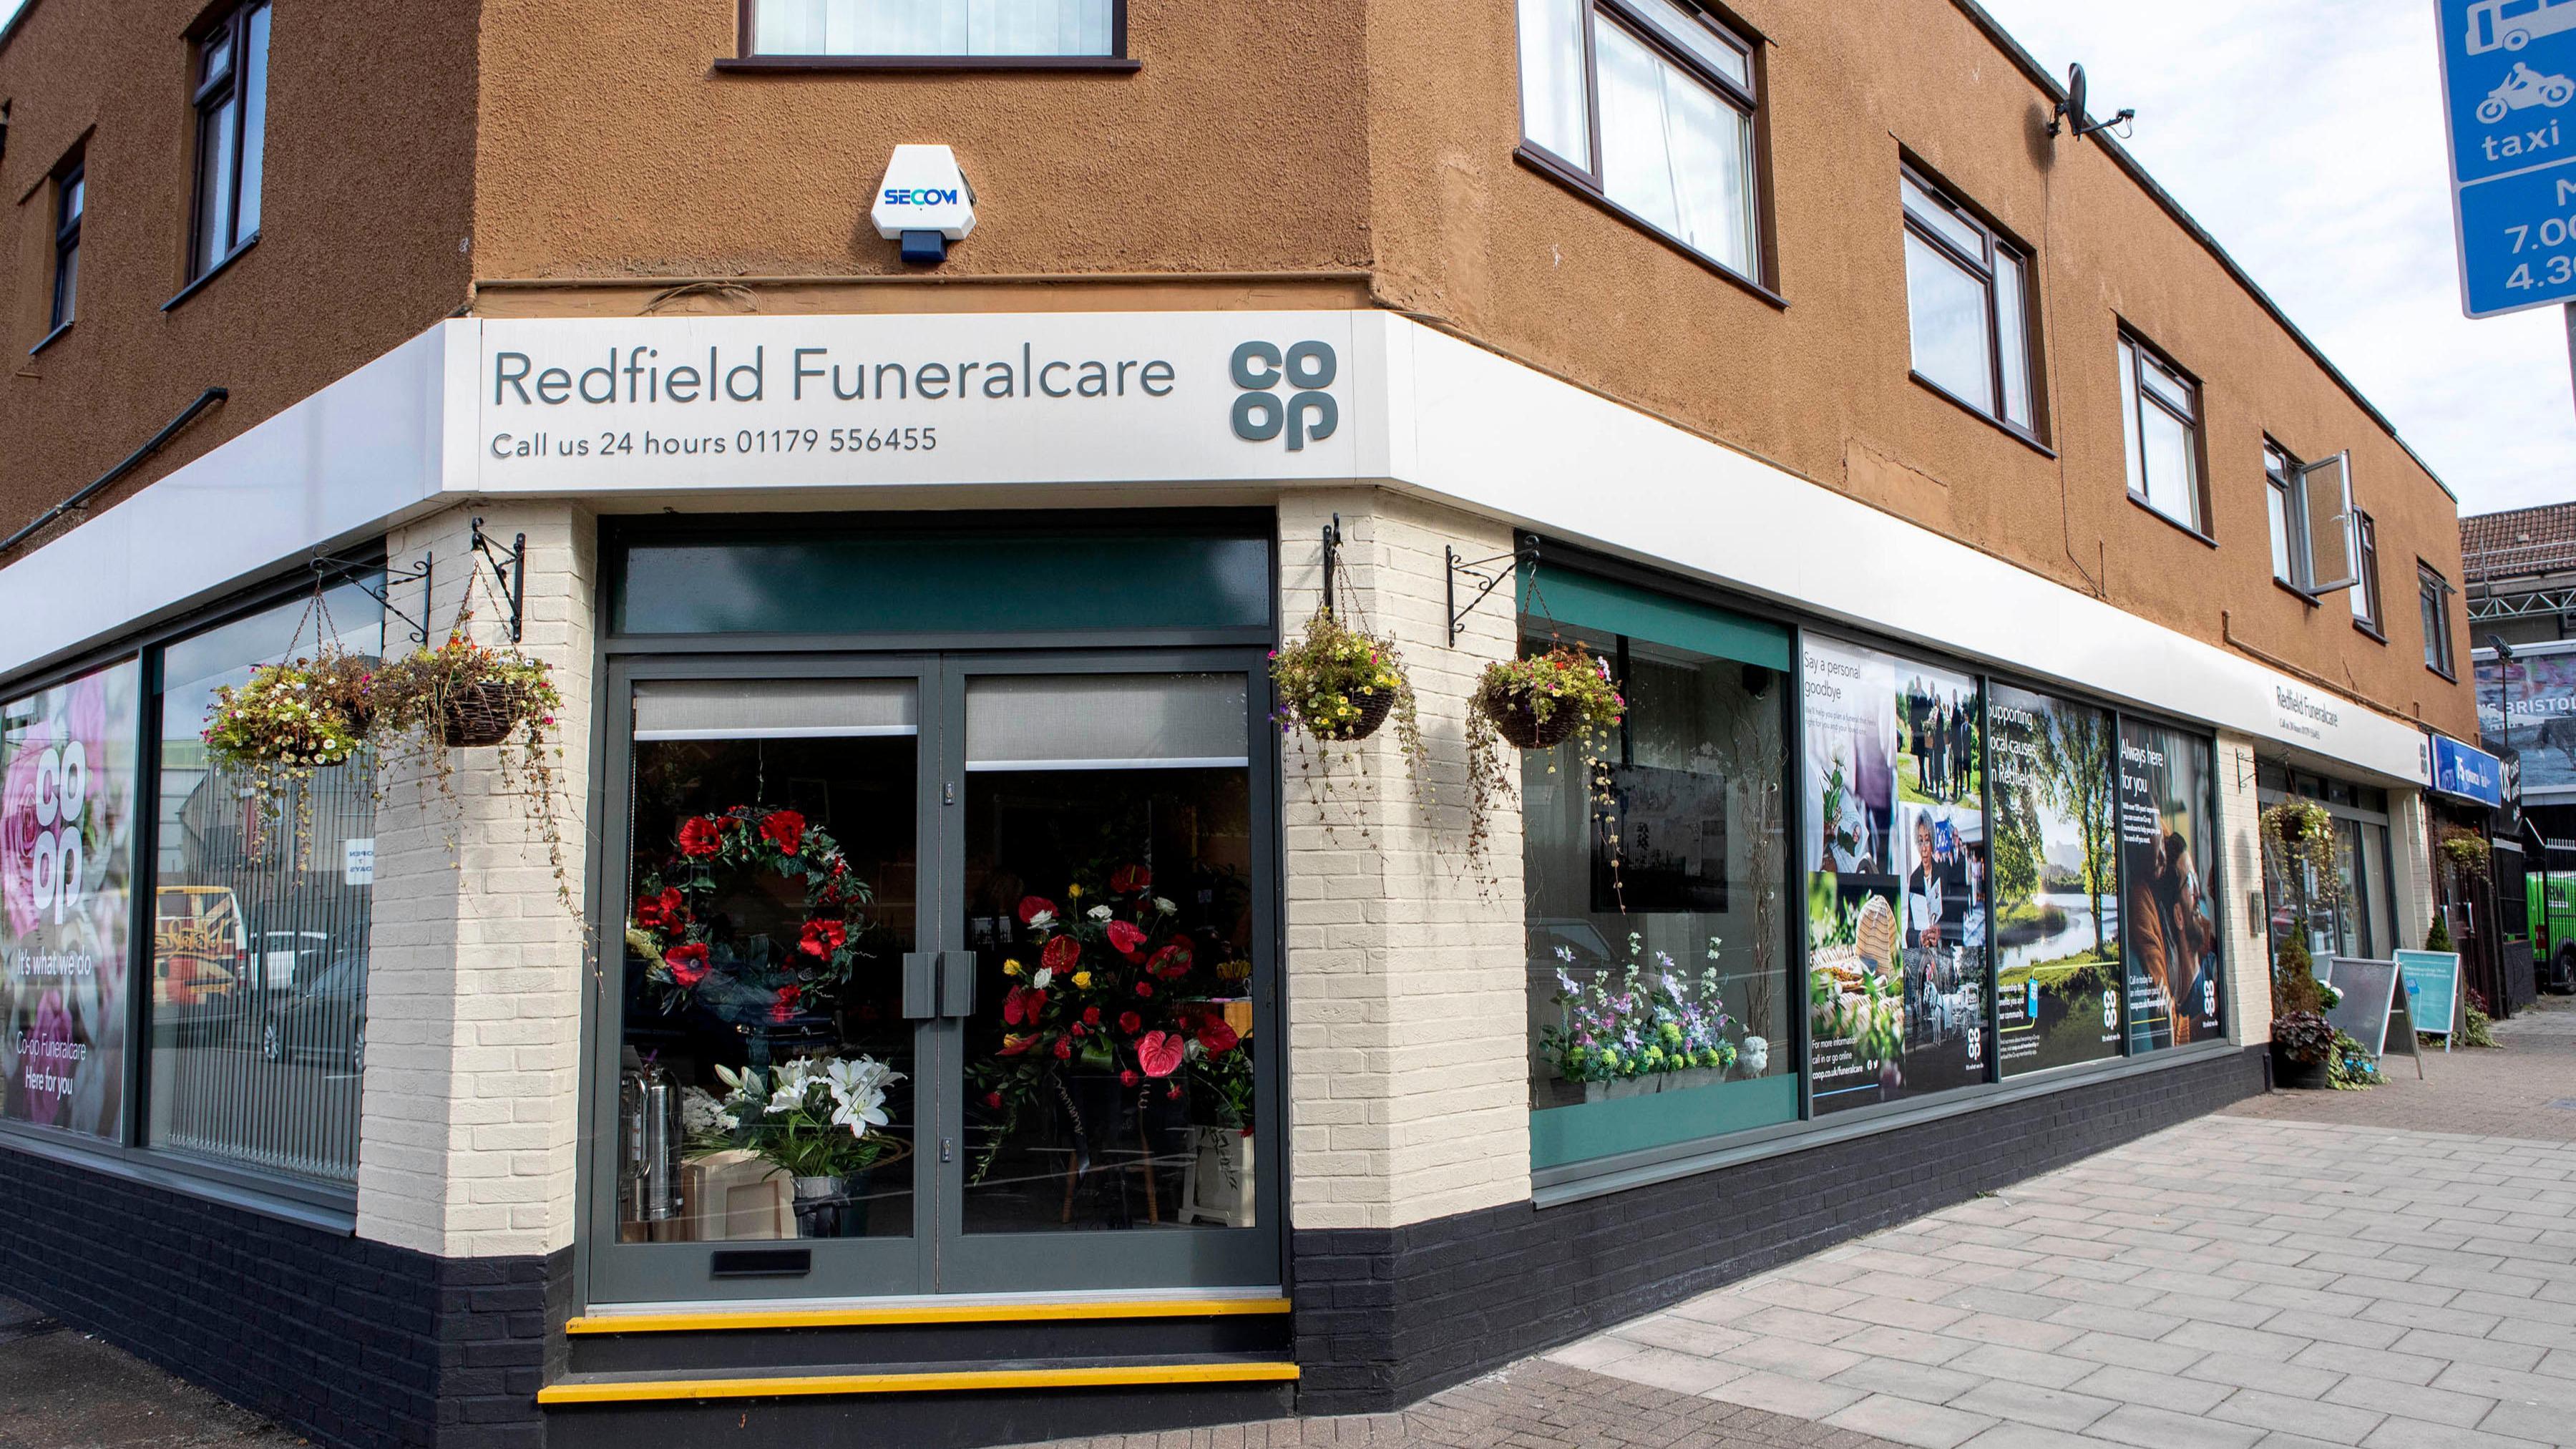 Images Co-op Funeralcare, Redfield